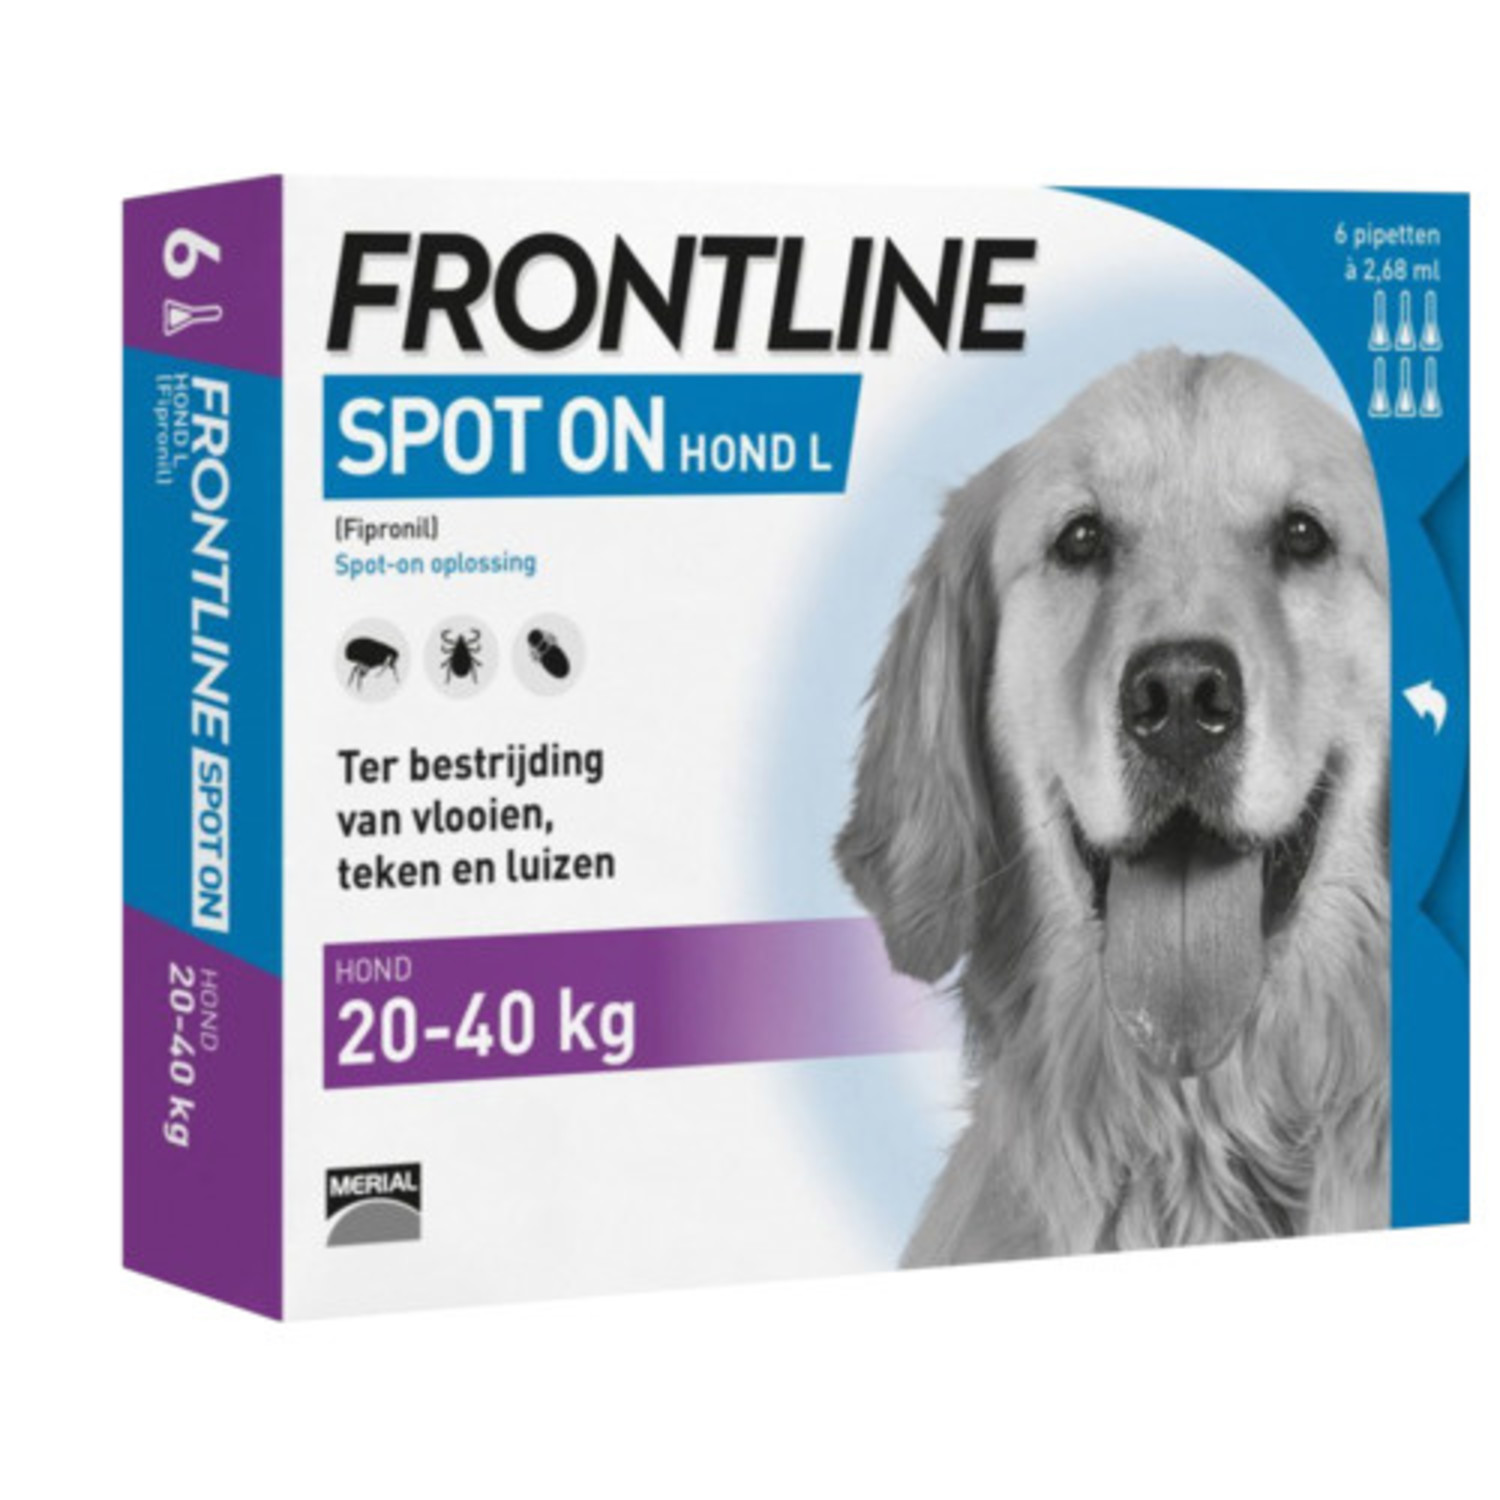 parallel droefheid Mangel Frontline Spot On Hond L (20 tot 40 kg) 6 pipetten - Agridiscounter